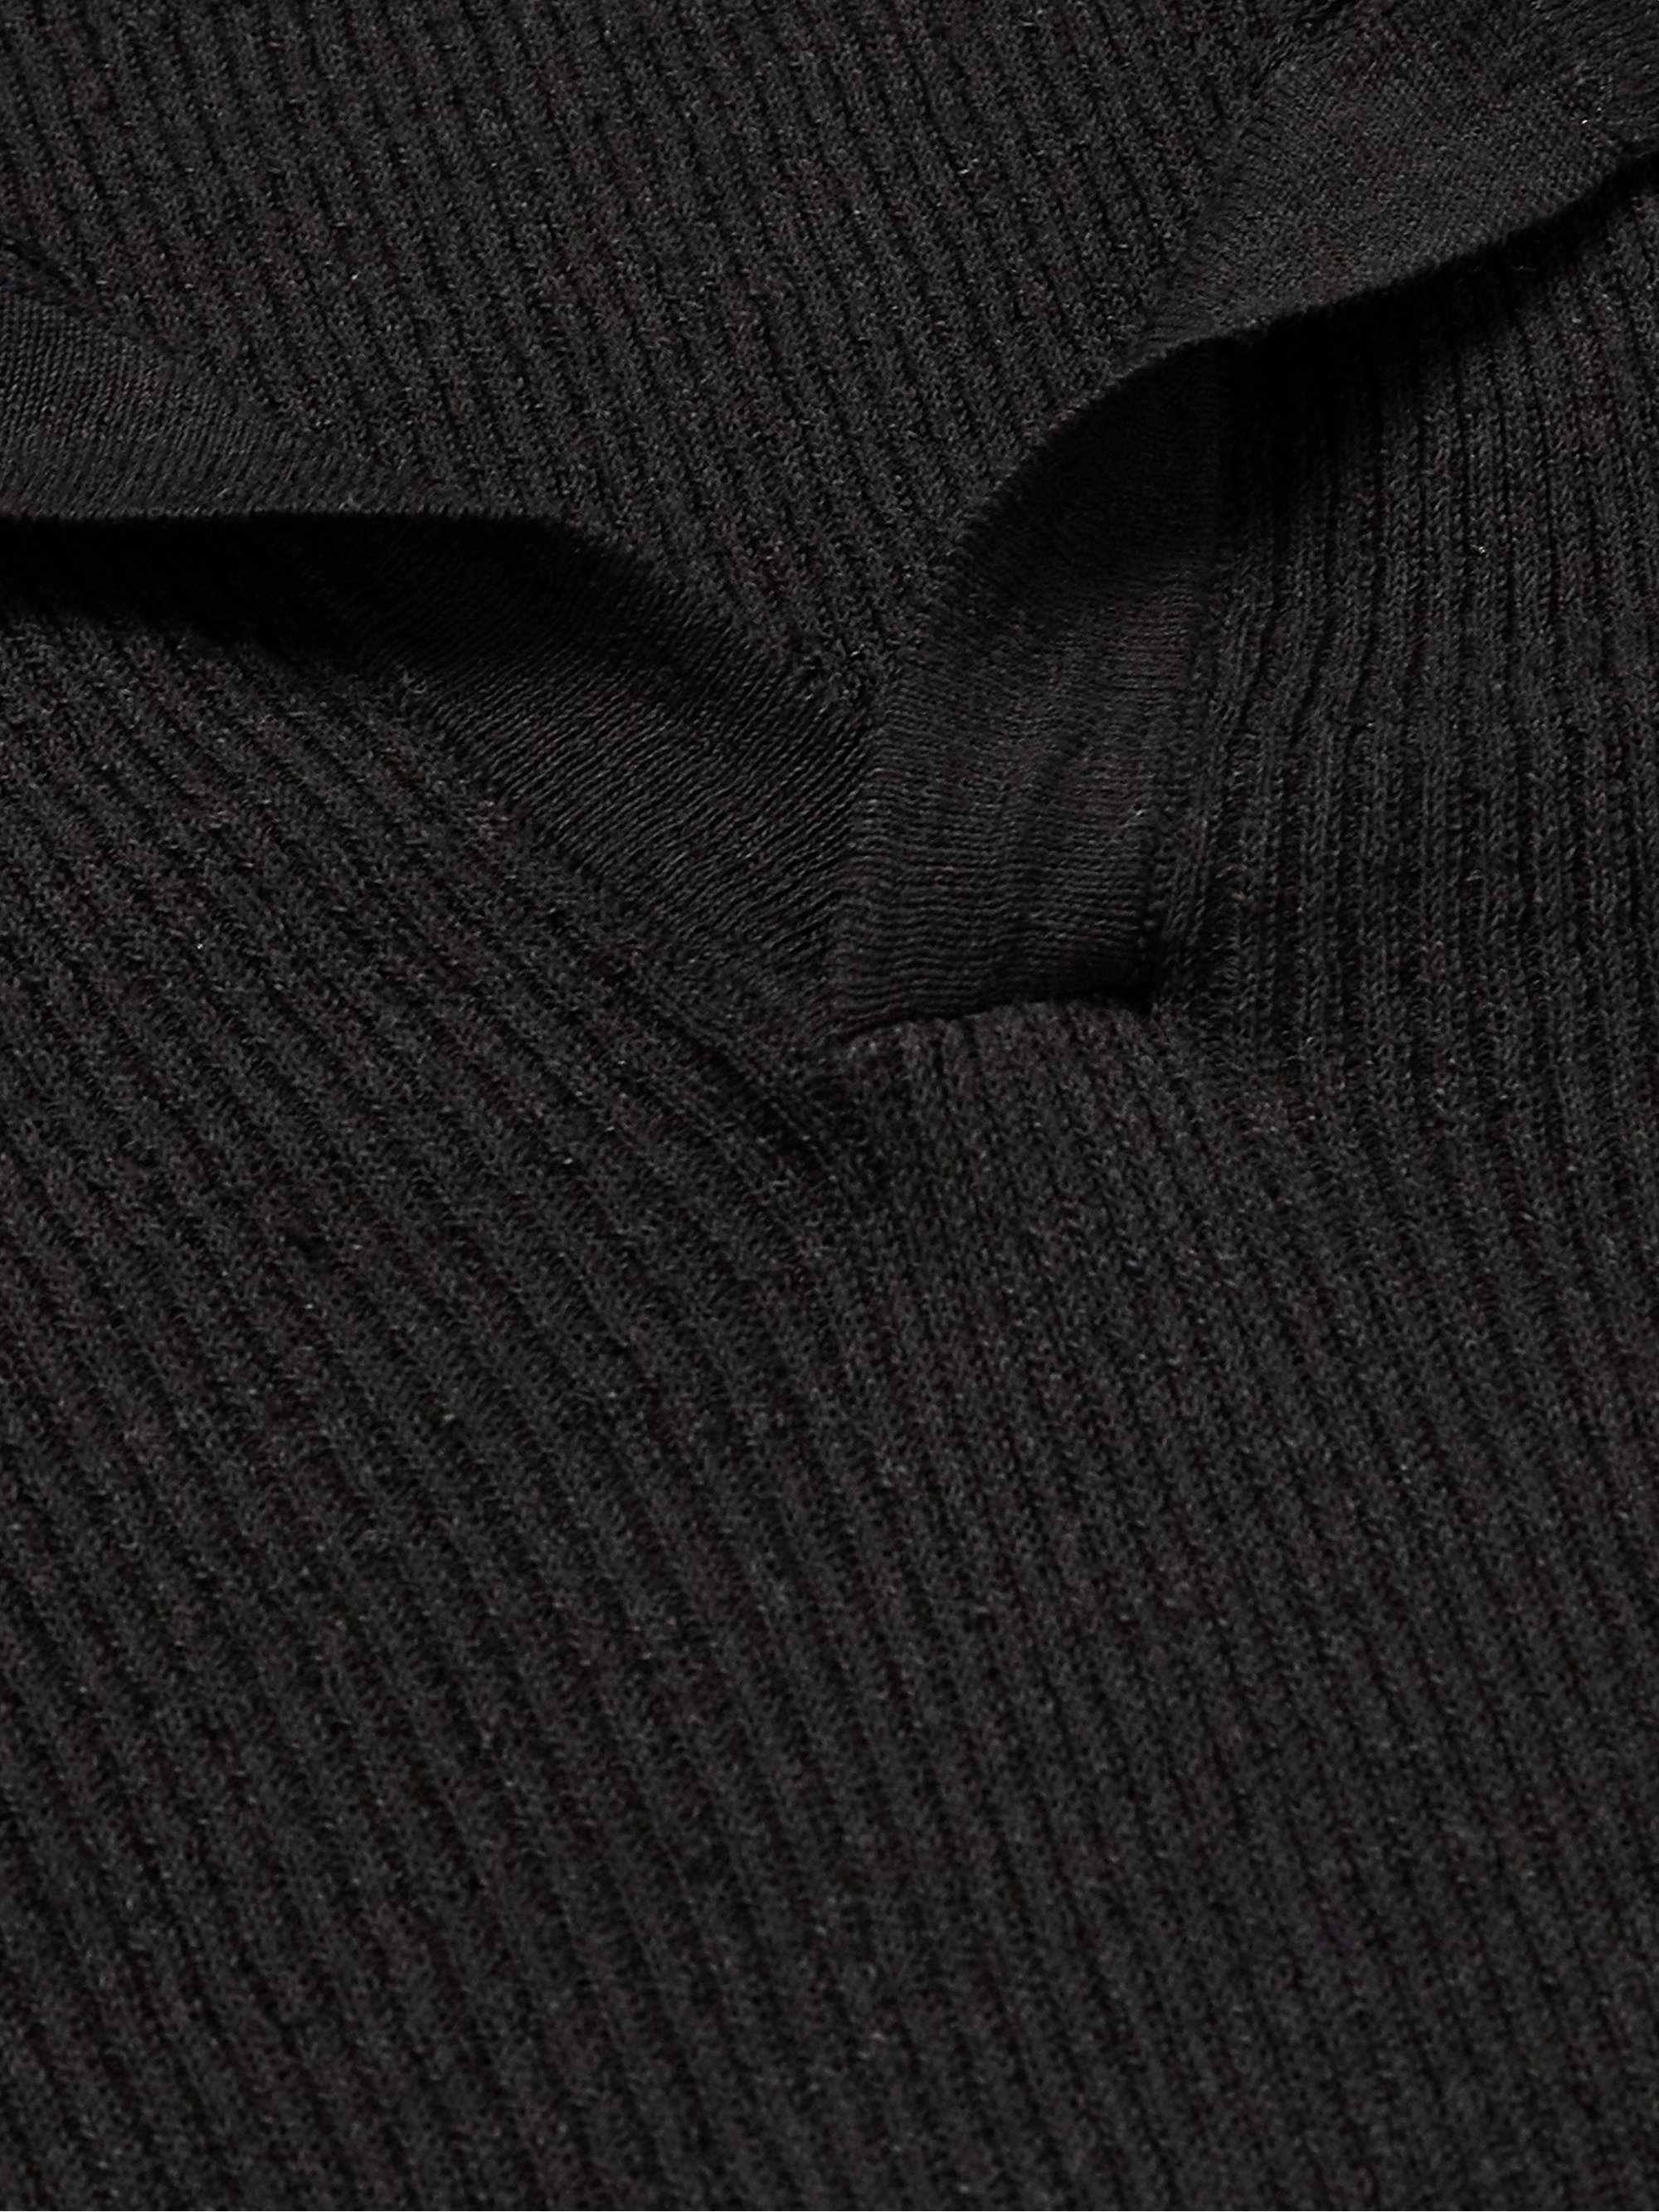 JAMES PERSE Ribbed Linen-Blend Polo Shirt for Men | MR PORTER